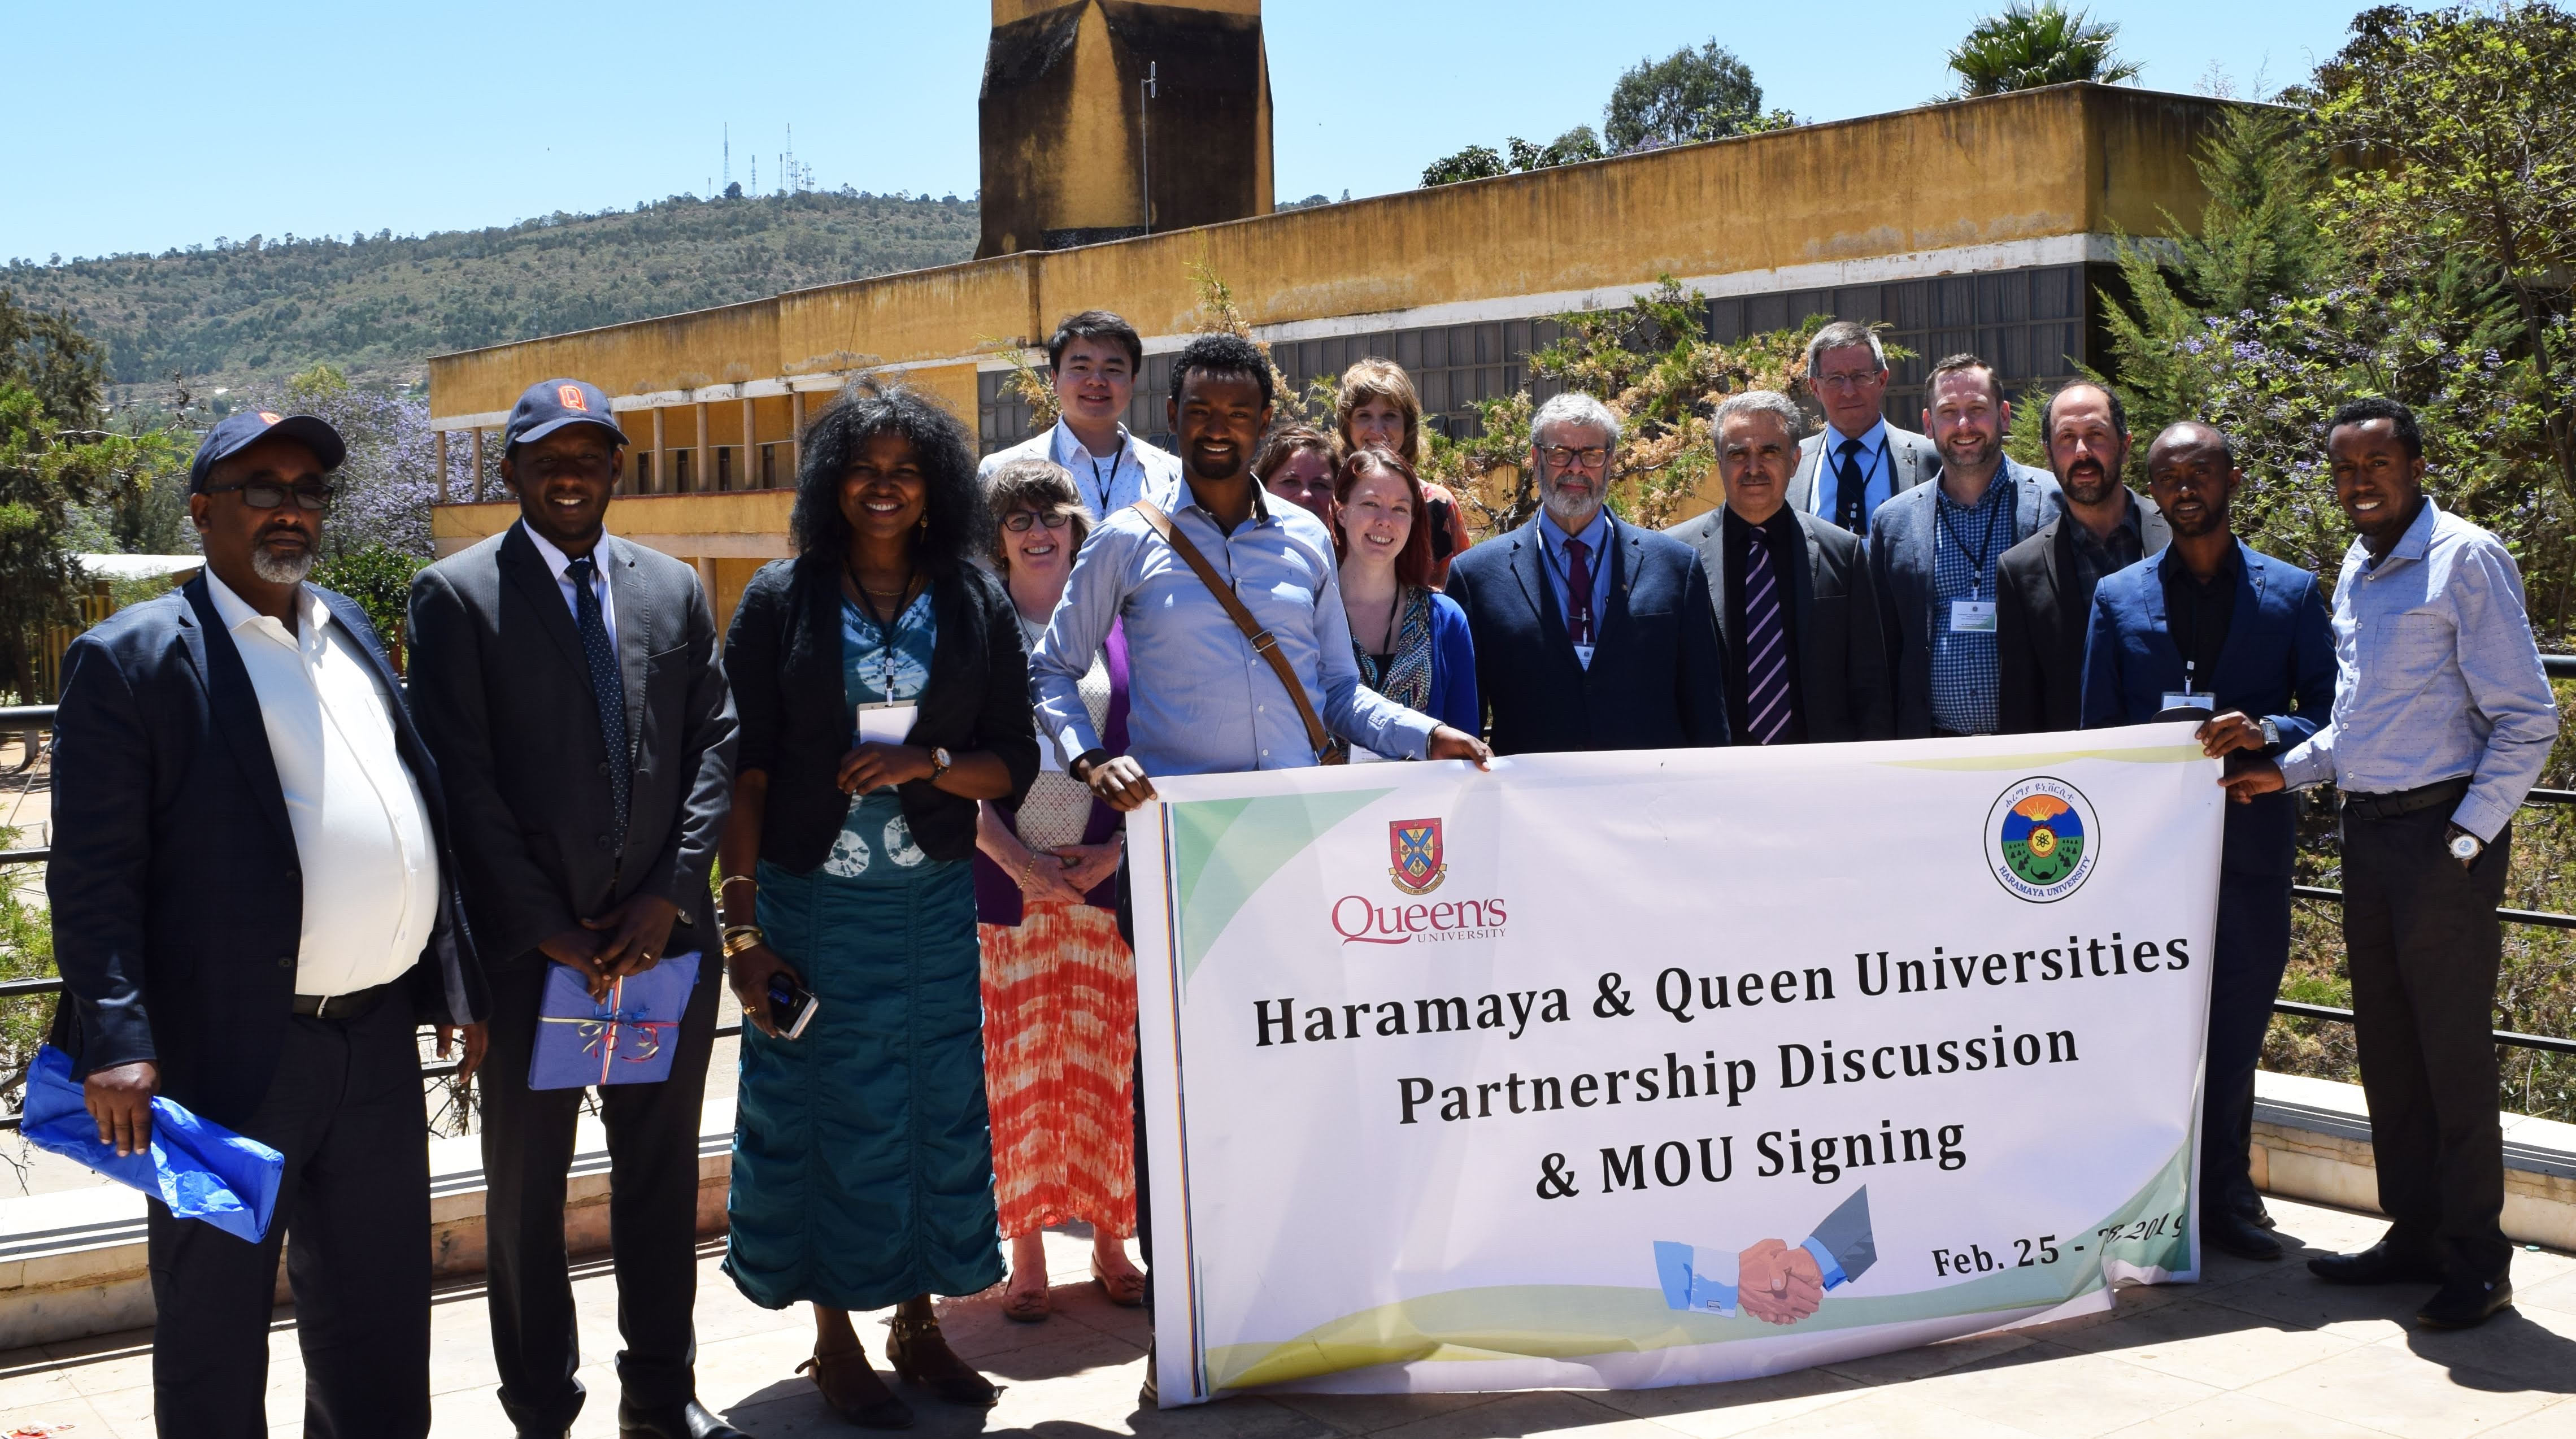 
                         Global Anesthesia                                                    - 
                          Haramaya & Queen's Universities                                                    